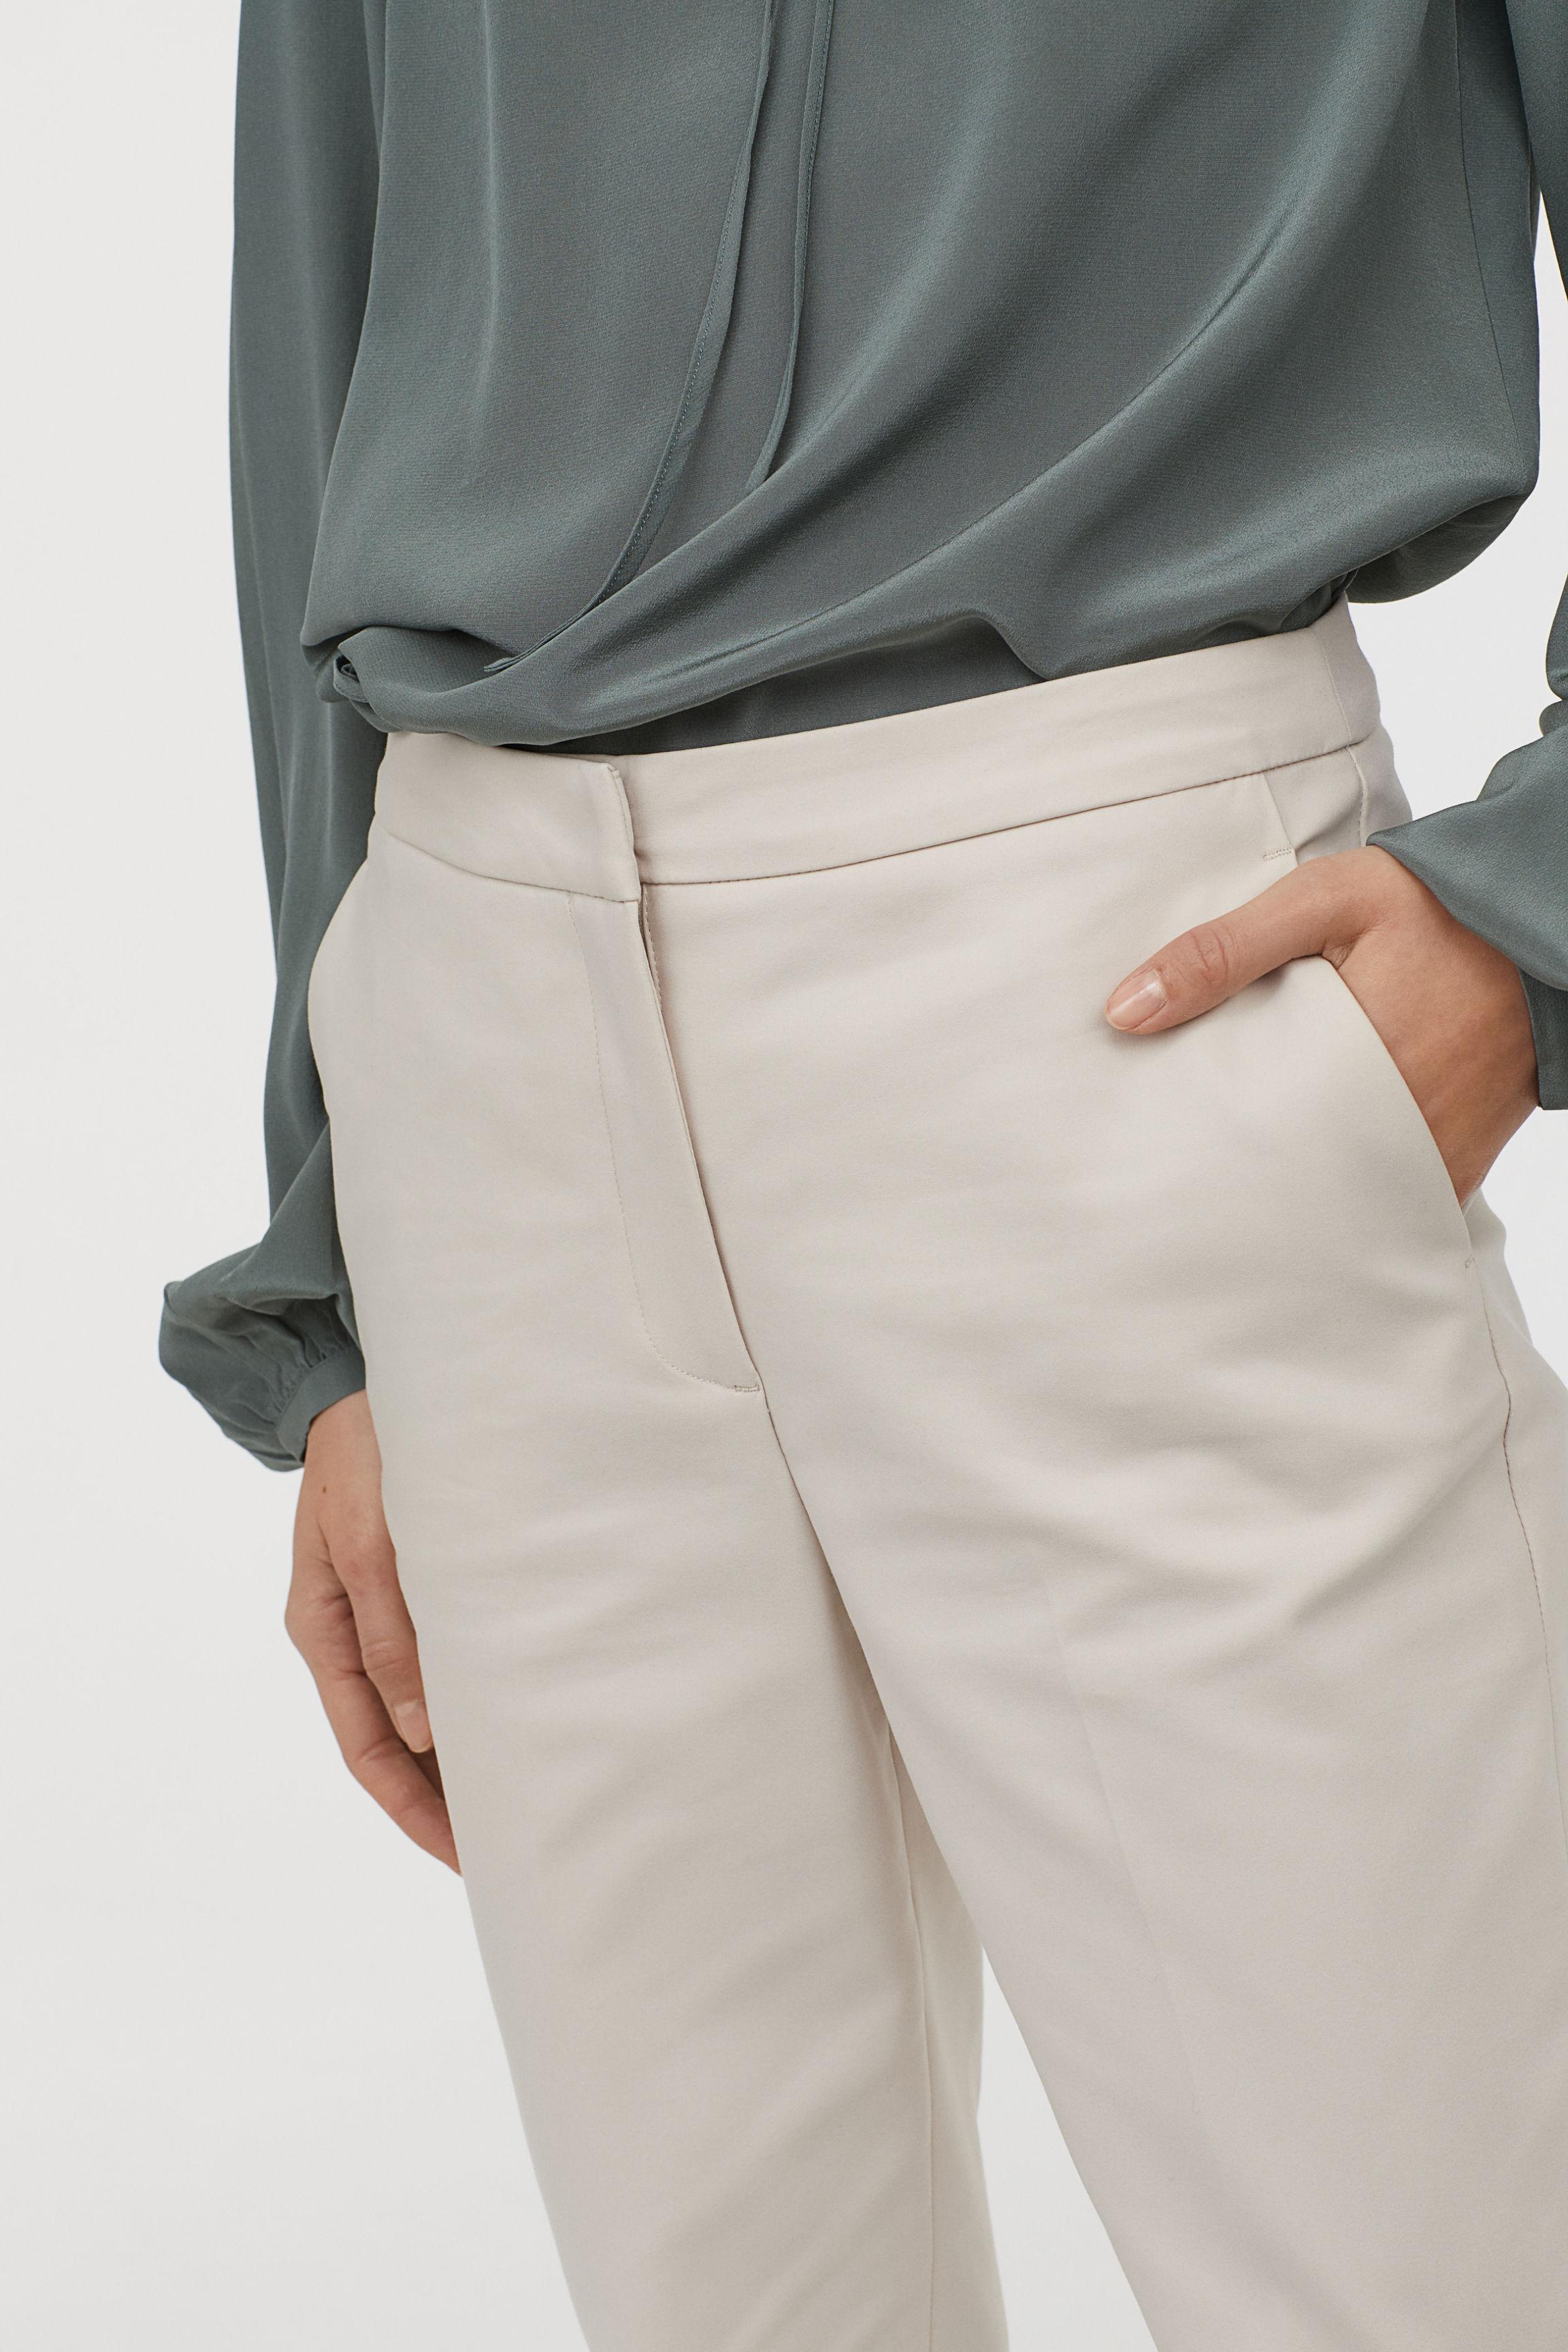 H&M Cotton Dress Pants in Light Beige (Natural) - Lyst